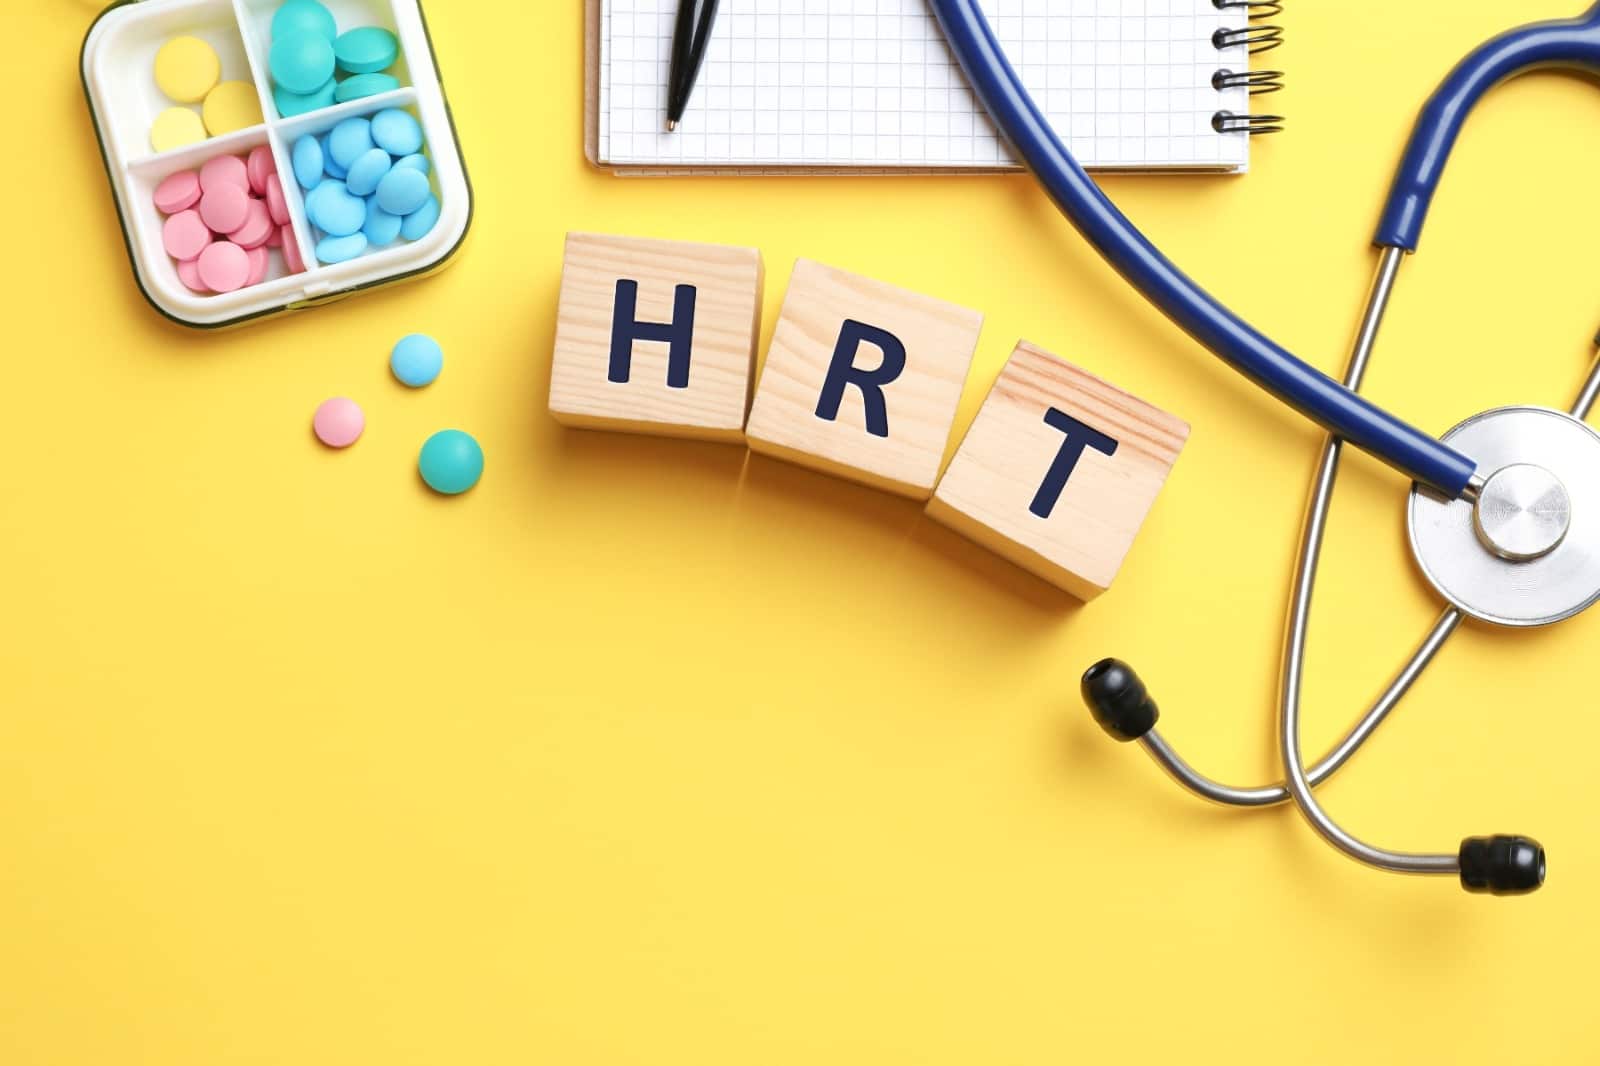 Factors behind the hrt medicine shortage in the uk